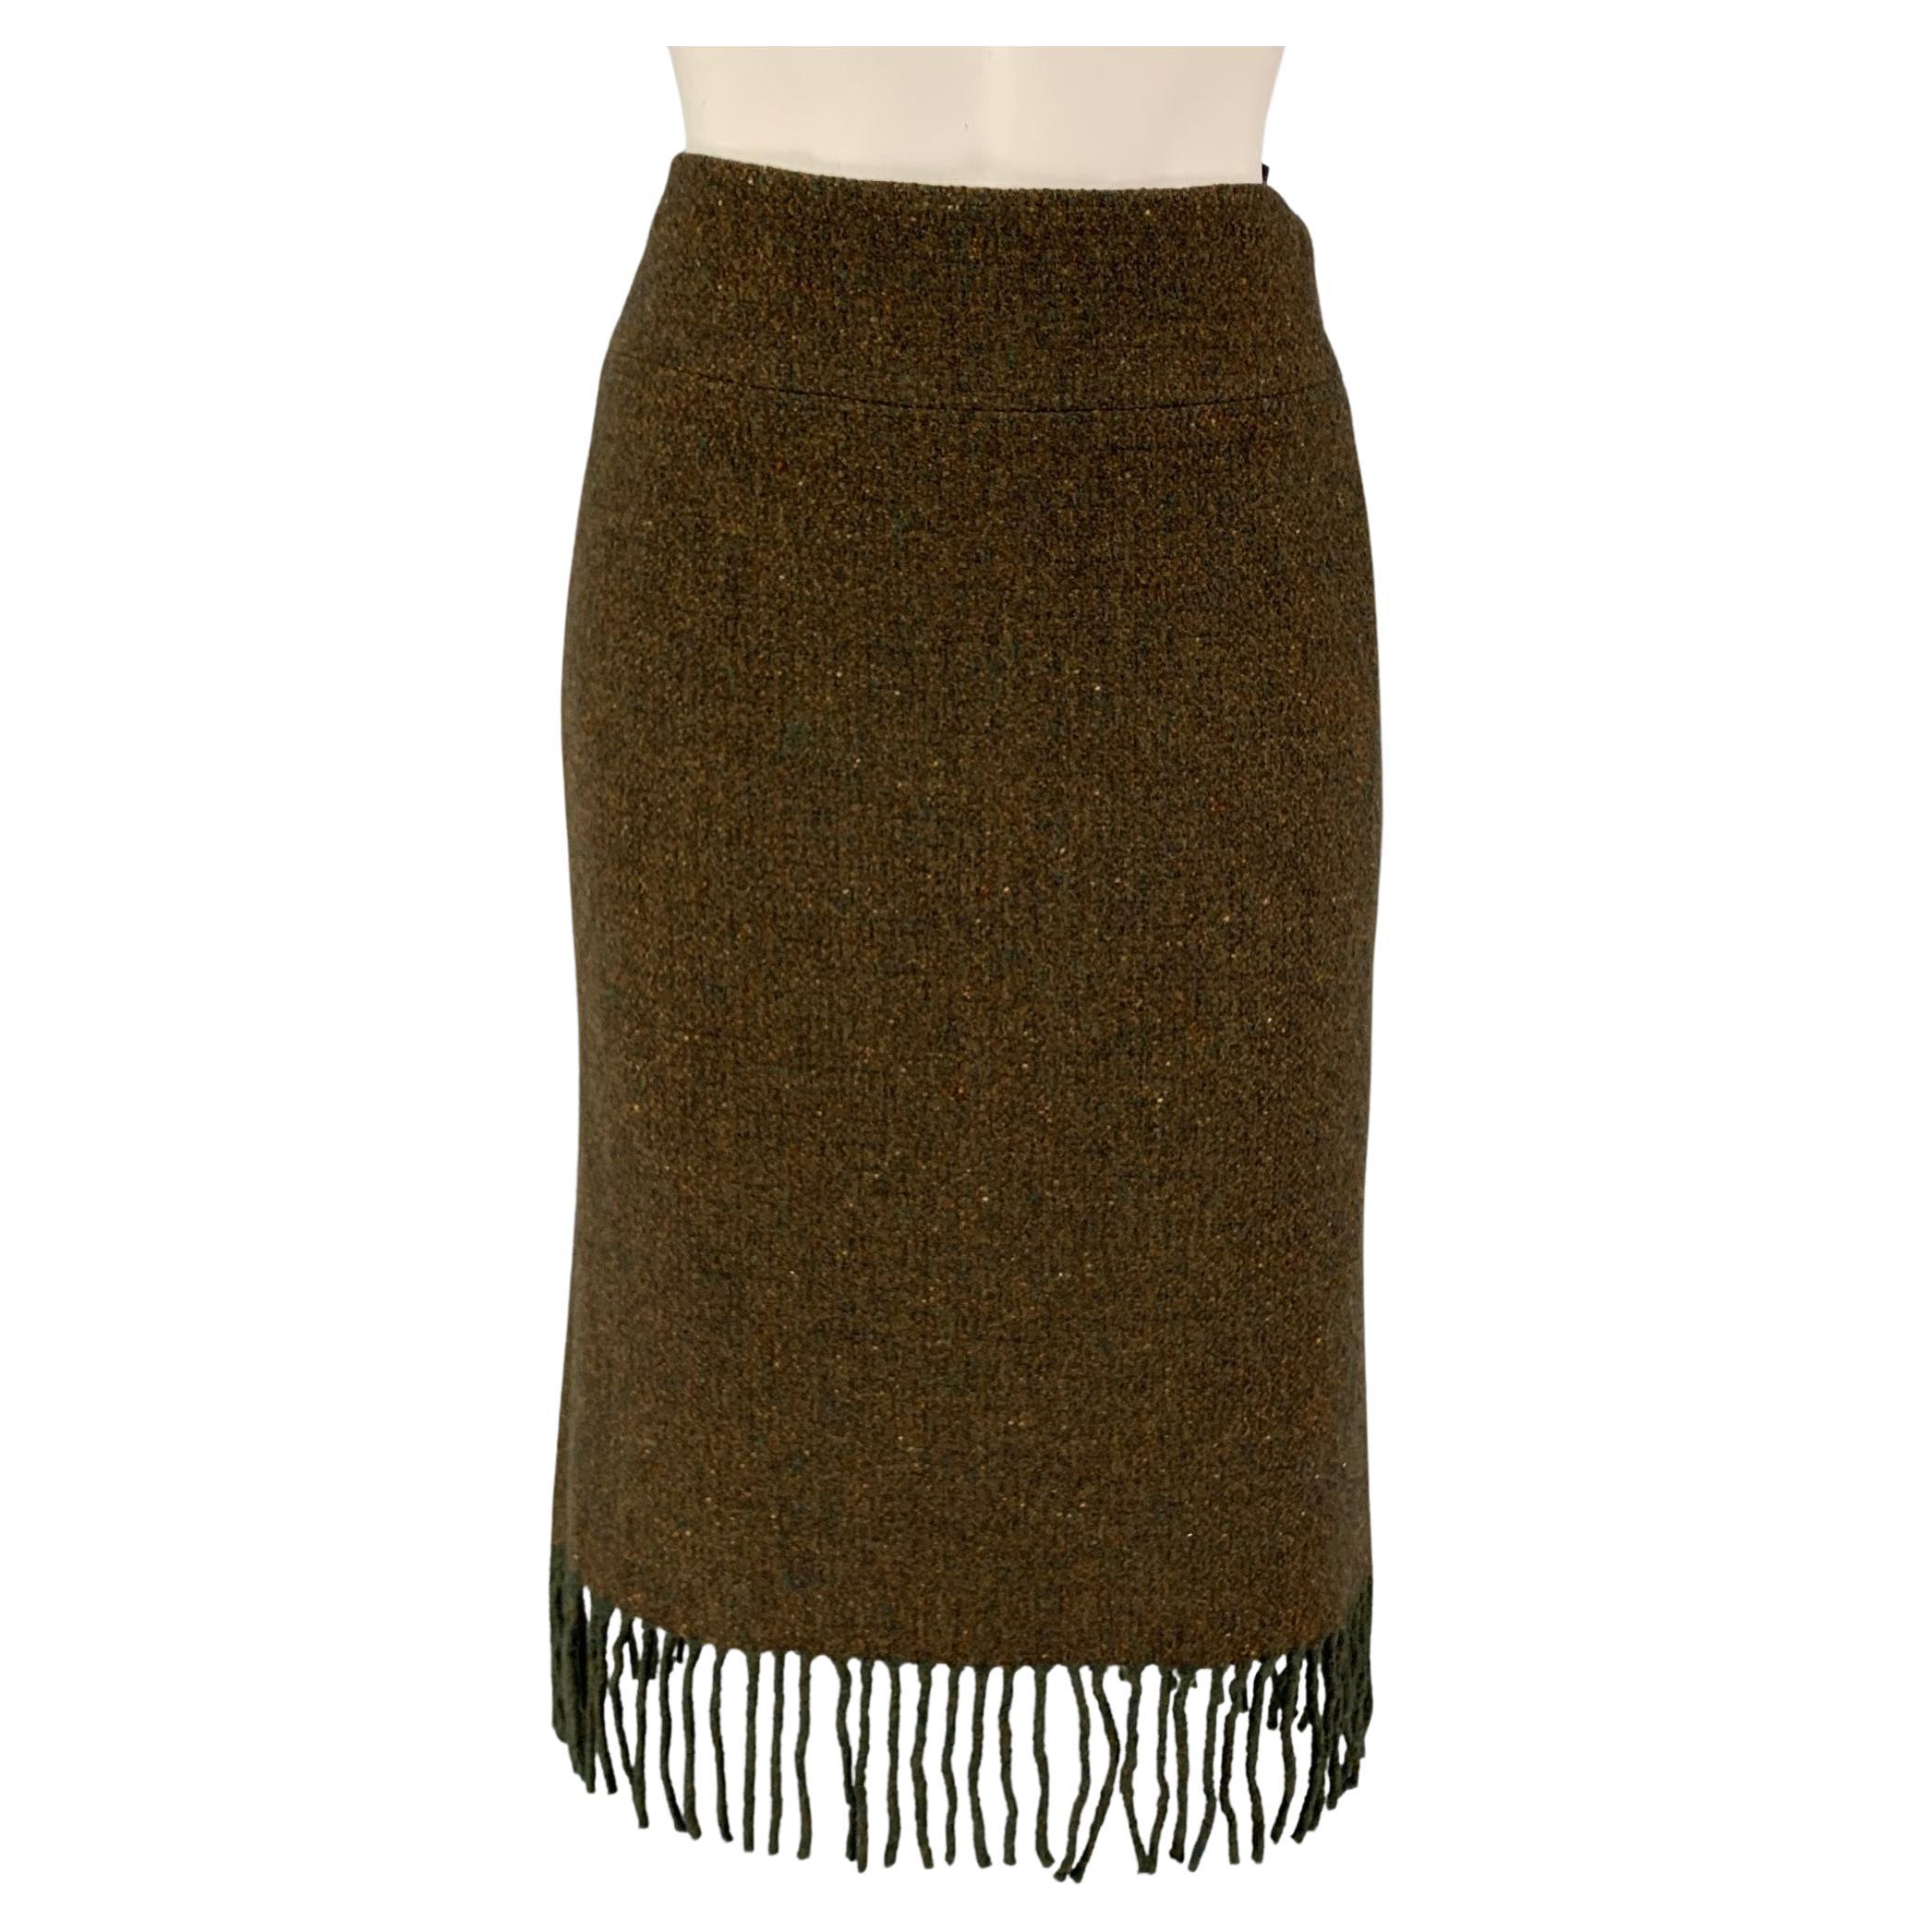 RALPH LAUREN Size 6 Olive Merino Wool Cashmere Heather Fringed Skirt